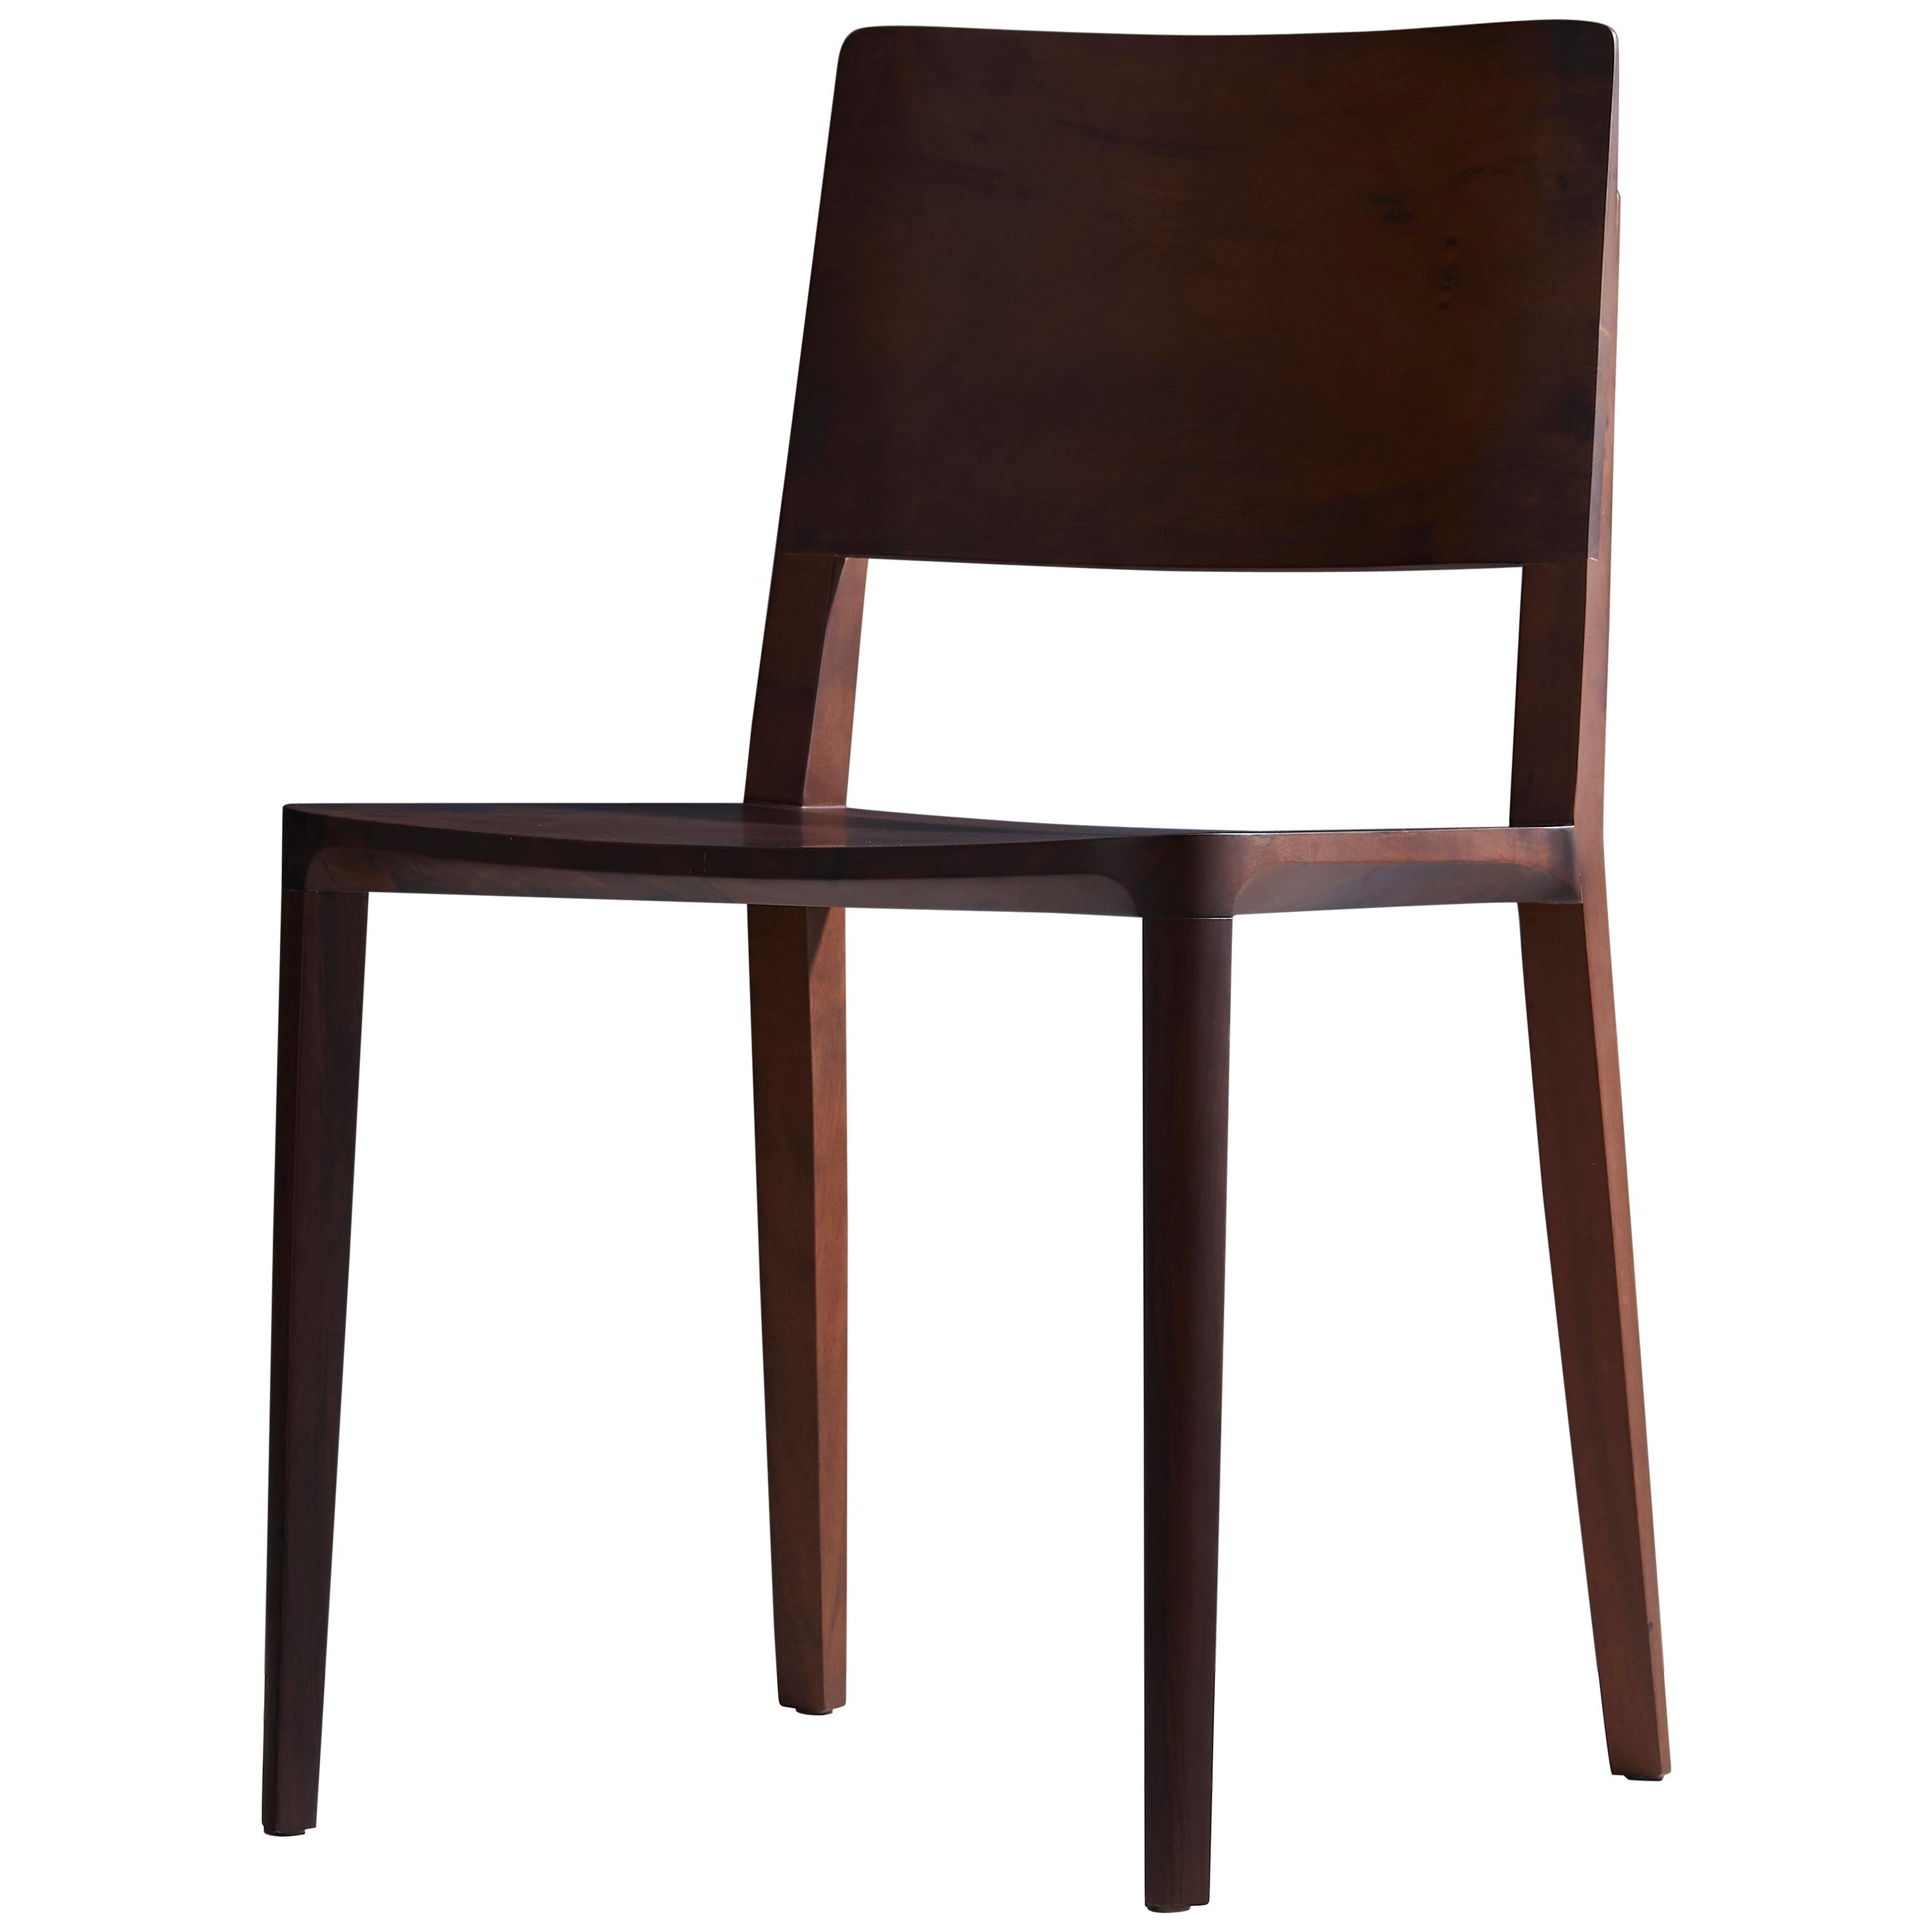 The Moderns Moderns Chair in Black Imbuia Solid Wood Limited Edition (Chaise moderne minimaliste en bois massif d'Imbuia noir) en vente